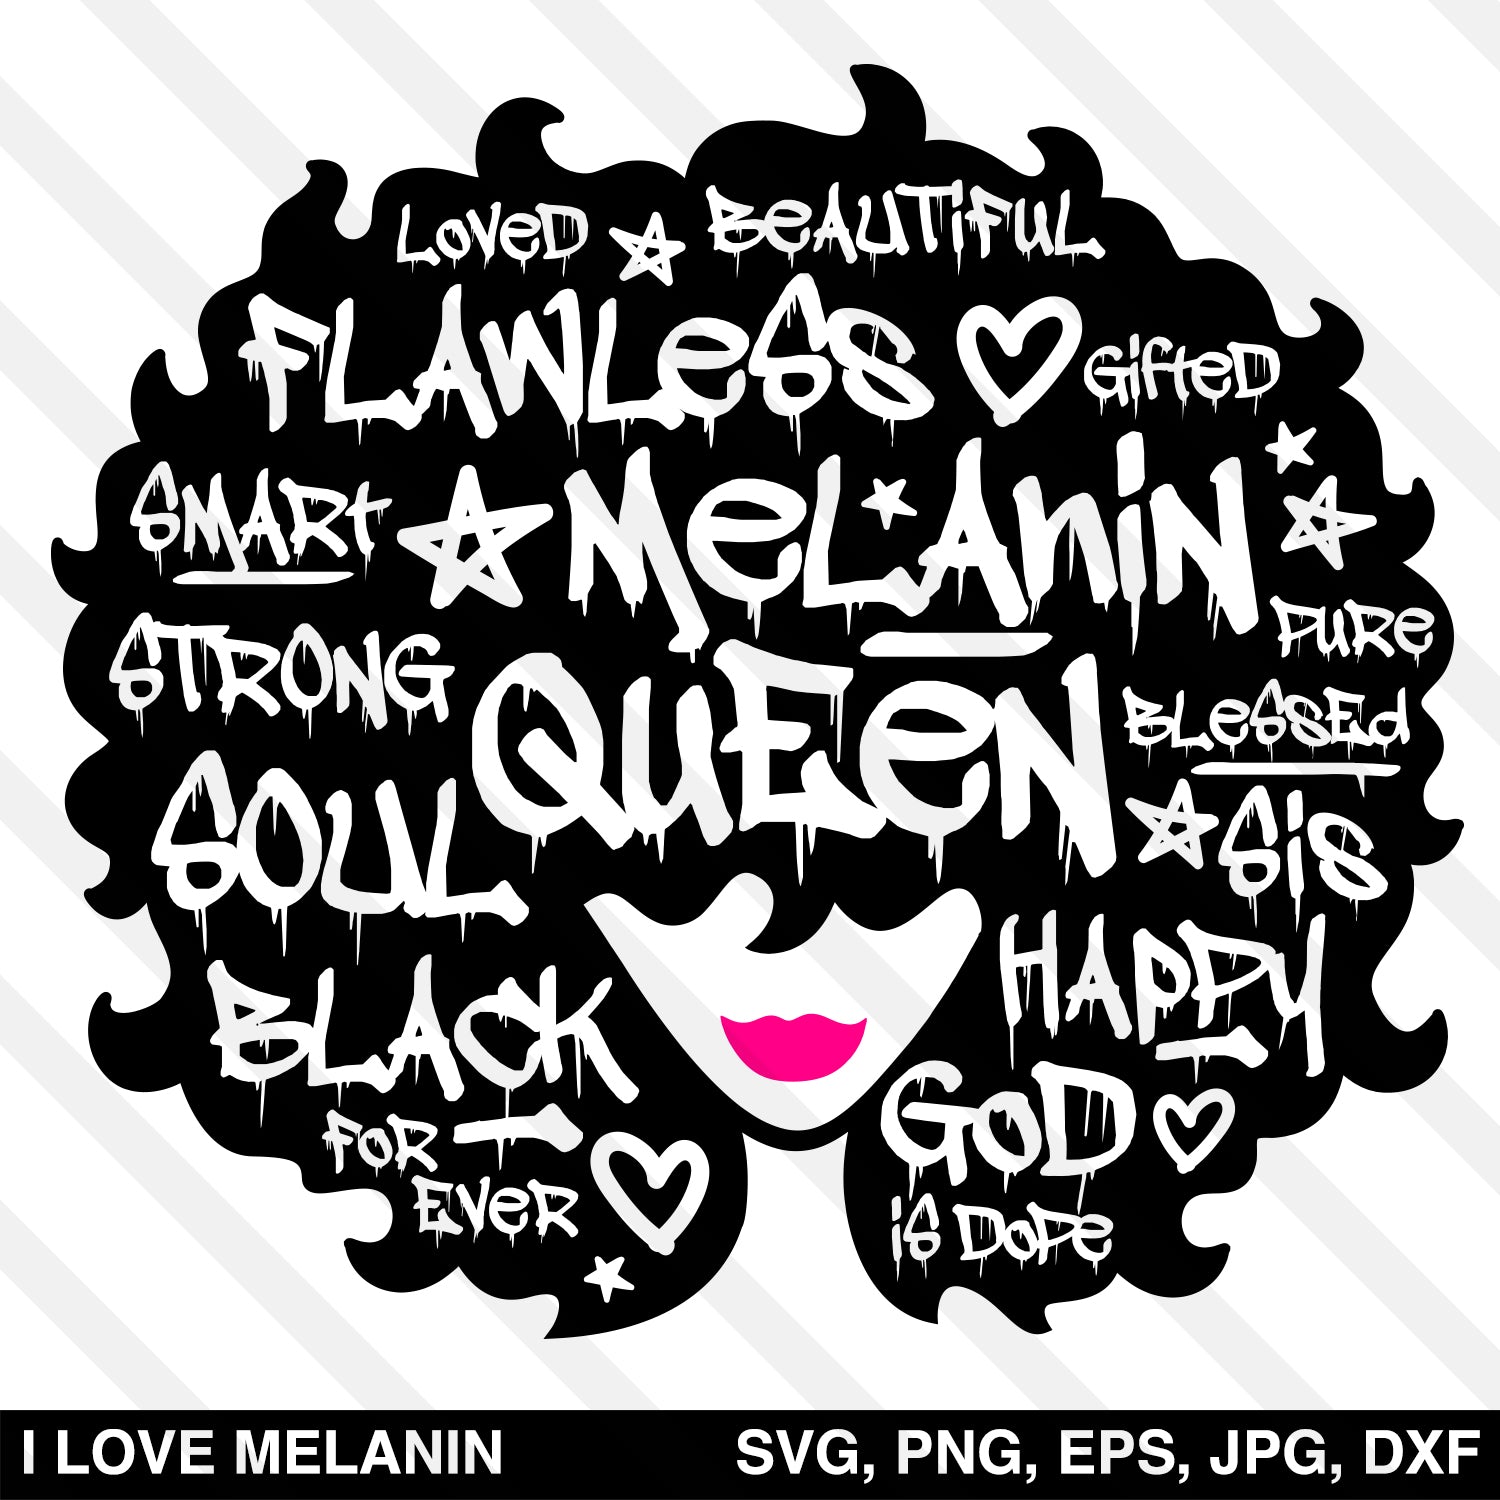 Download Graffiti Black Queen Afro Woman Svg I Love Melanin